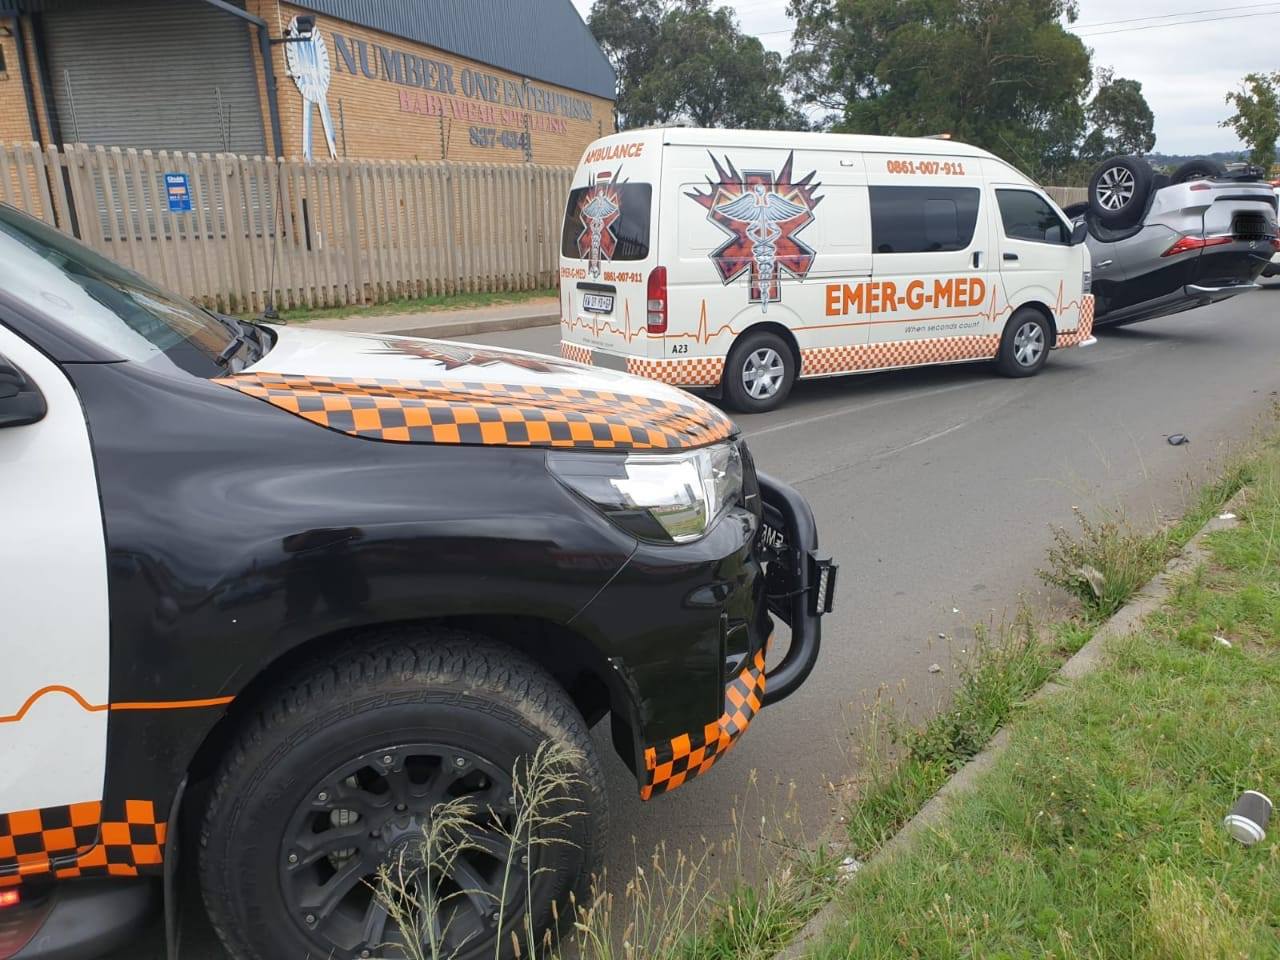 One person injured in vehicle rollover in Amalgam, Johannesburg